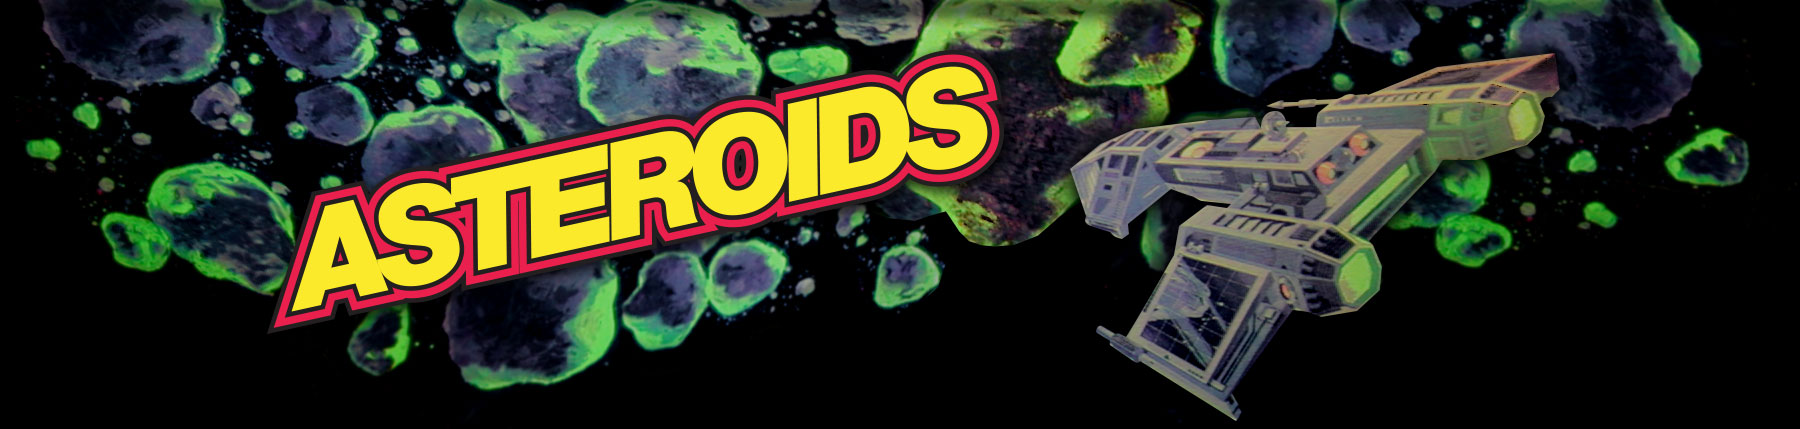 Asteroids Logo